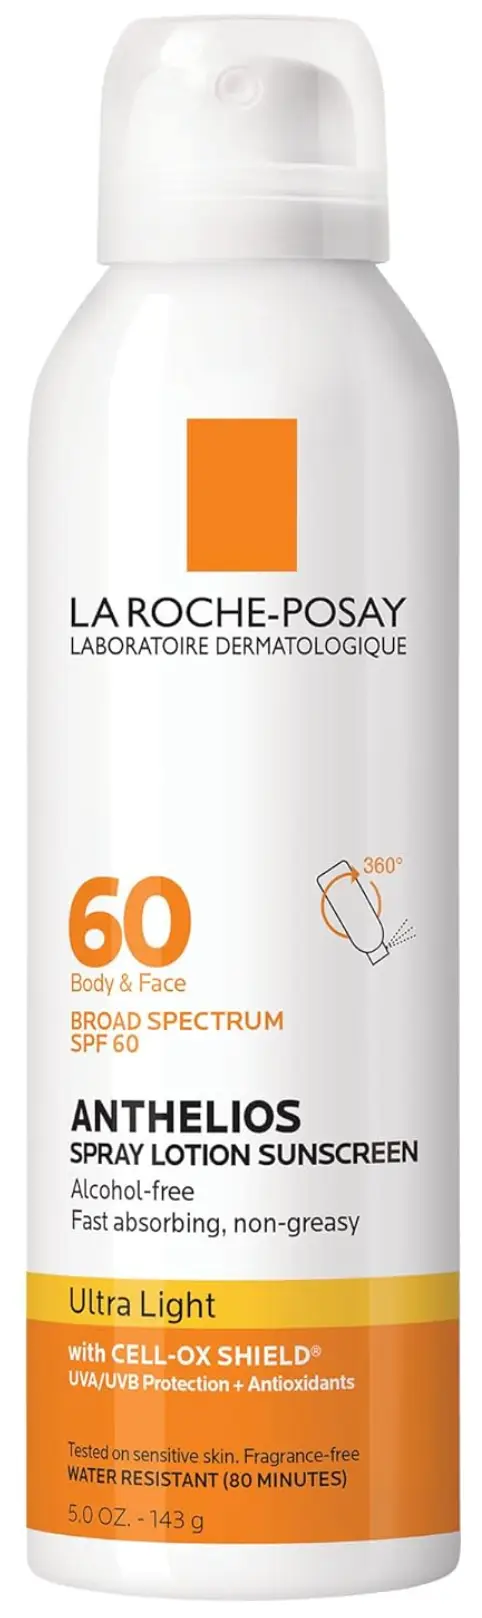 La Roche-Posay Anthelios Ultra-Light Sunscreen Spray Travel Essential